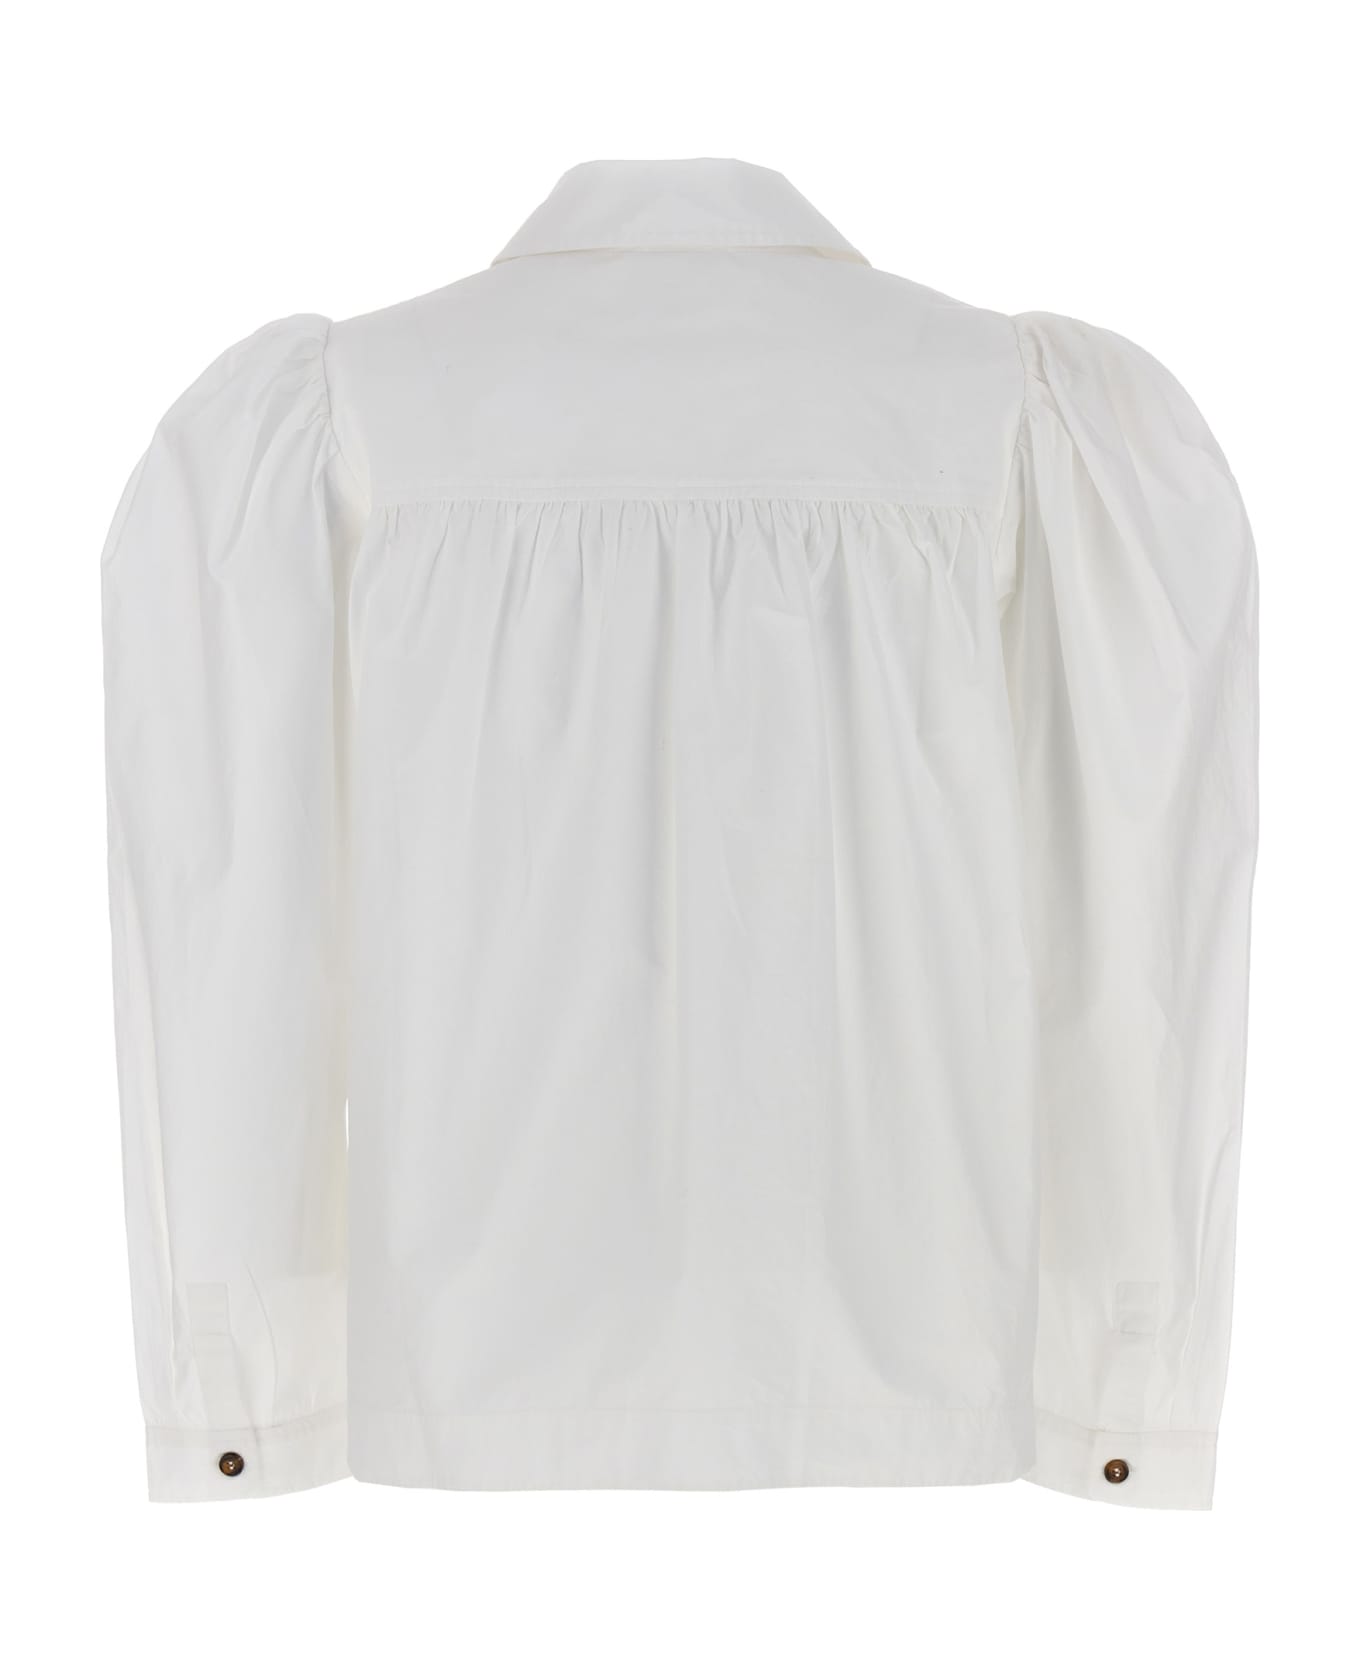 Ganni Puff Sleeved Shirt - Bianco